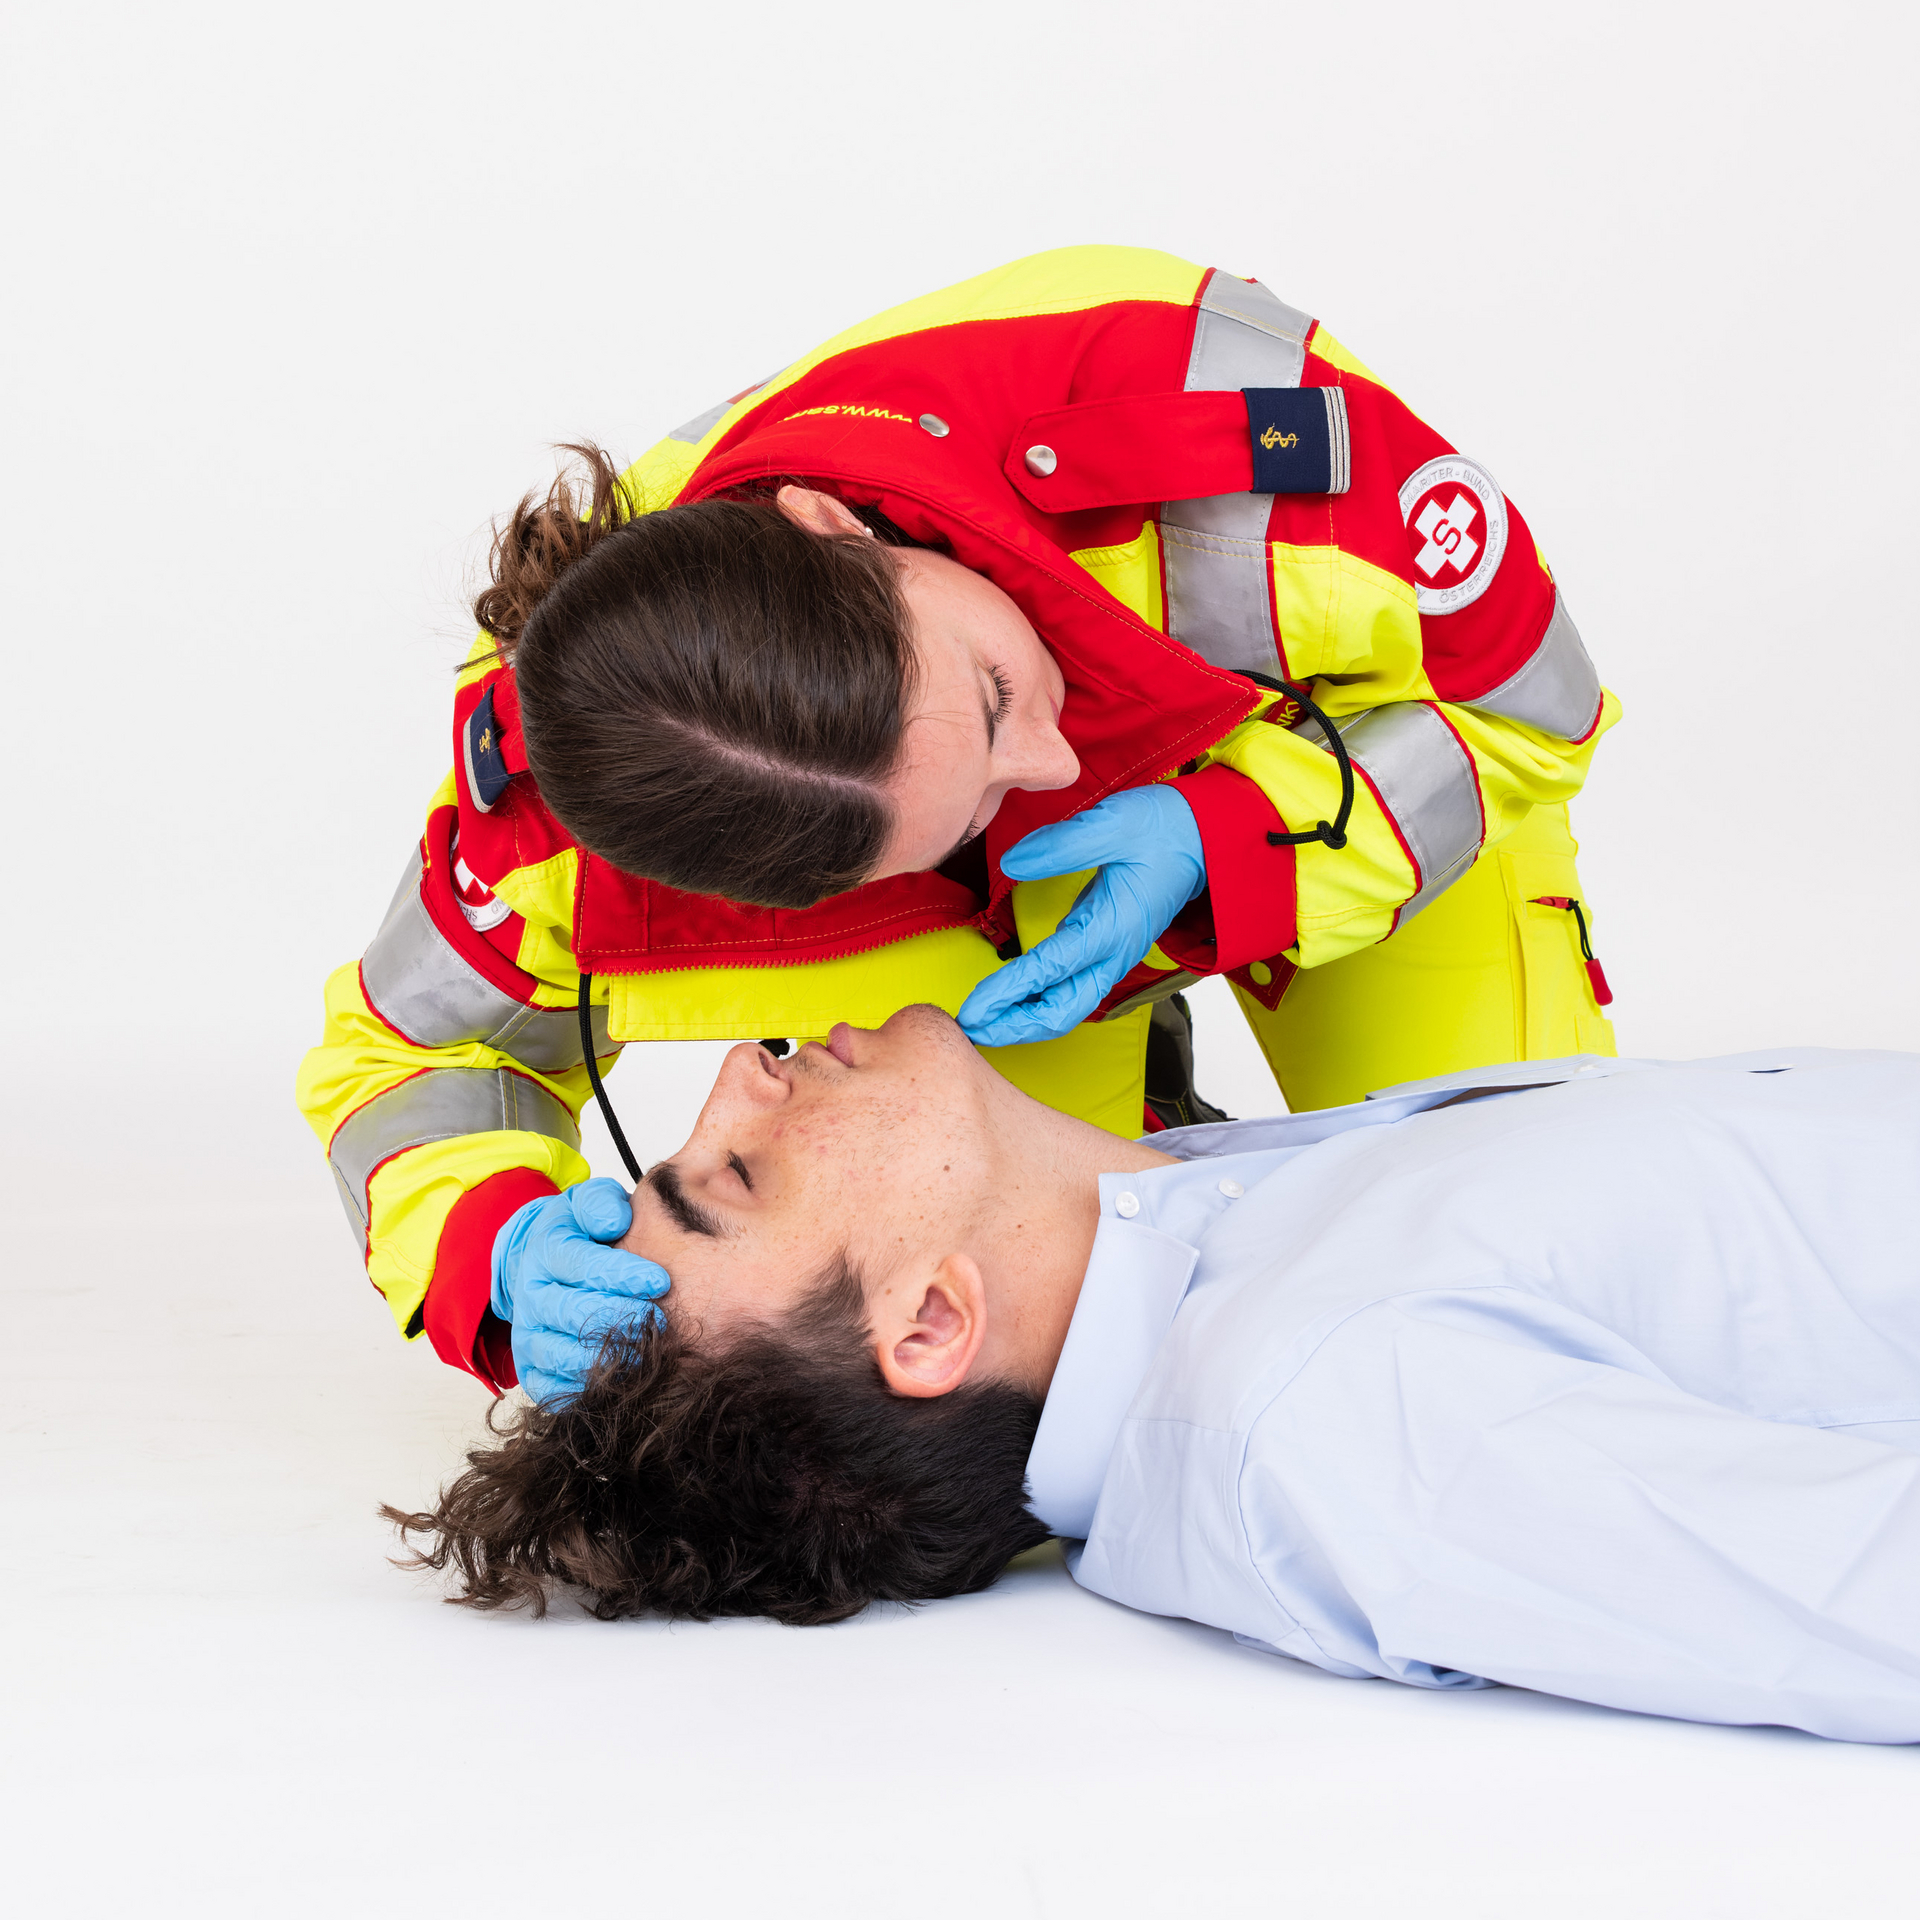 Rettungssanitäterin überprüft Atmung bei Patient